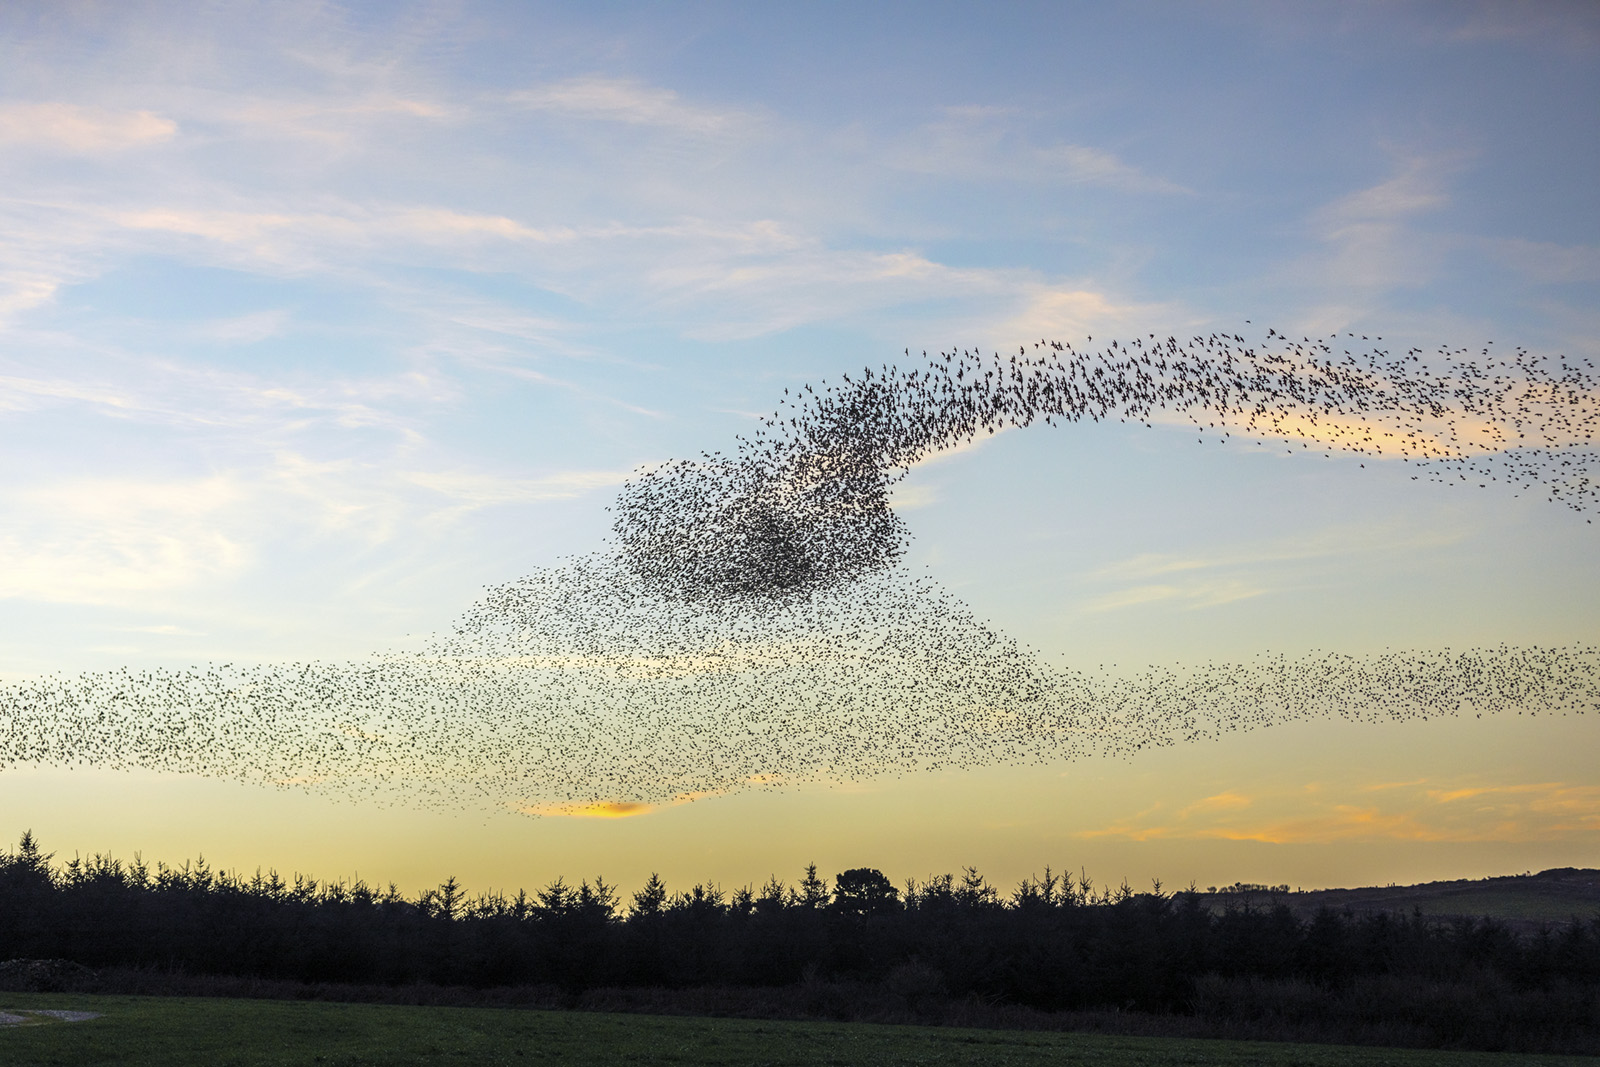 Starlings murmurating near Pendeen. Credit: David Chapman